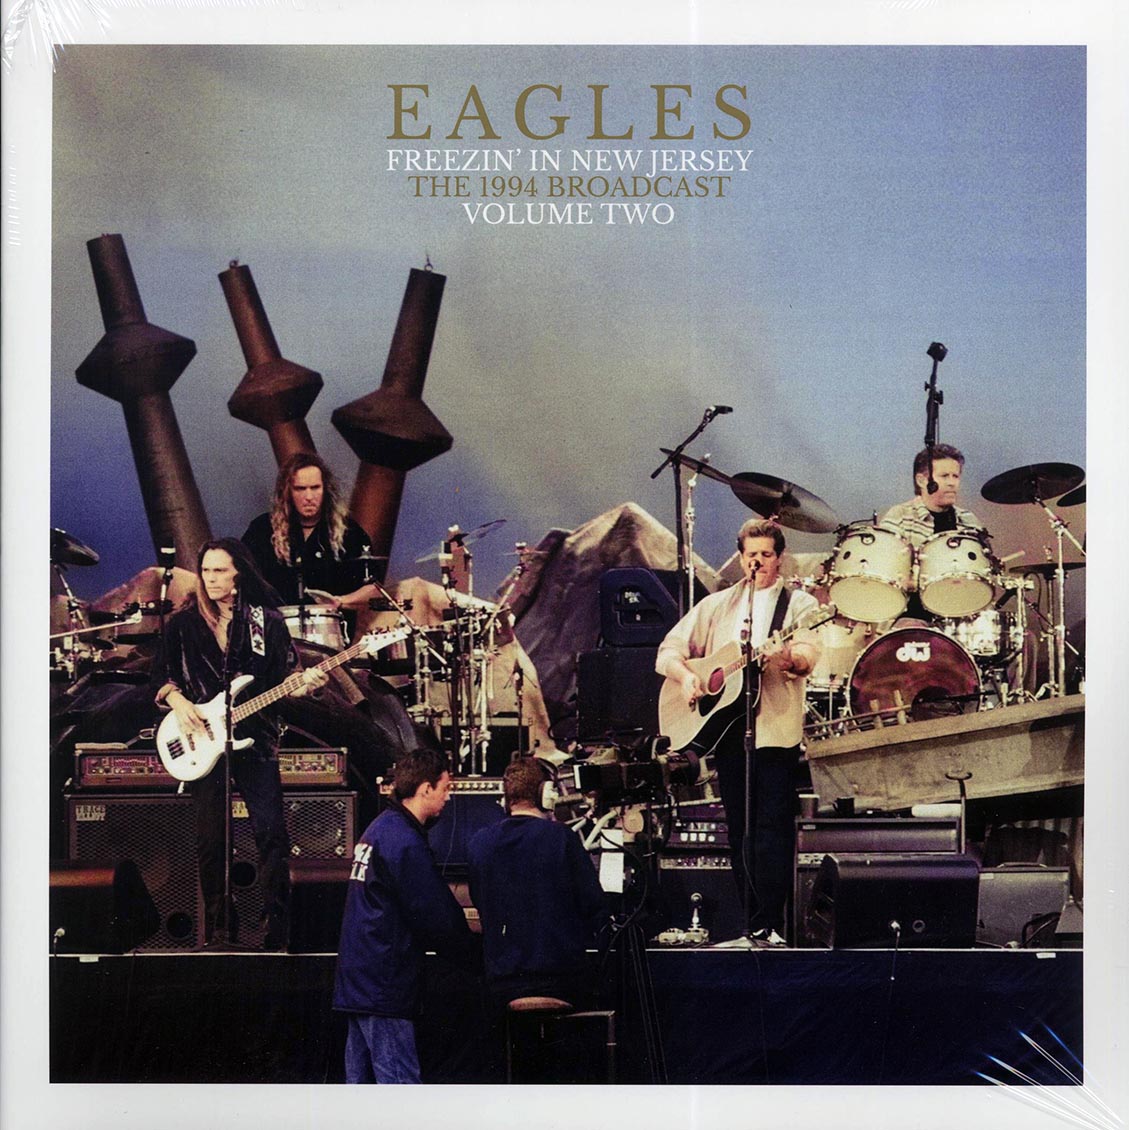 Eagles - Freezin' In New Jersey Volume 2 (2xLP) - Vinyl LP